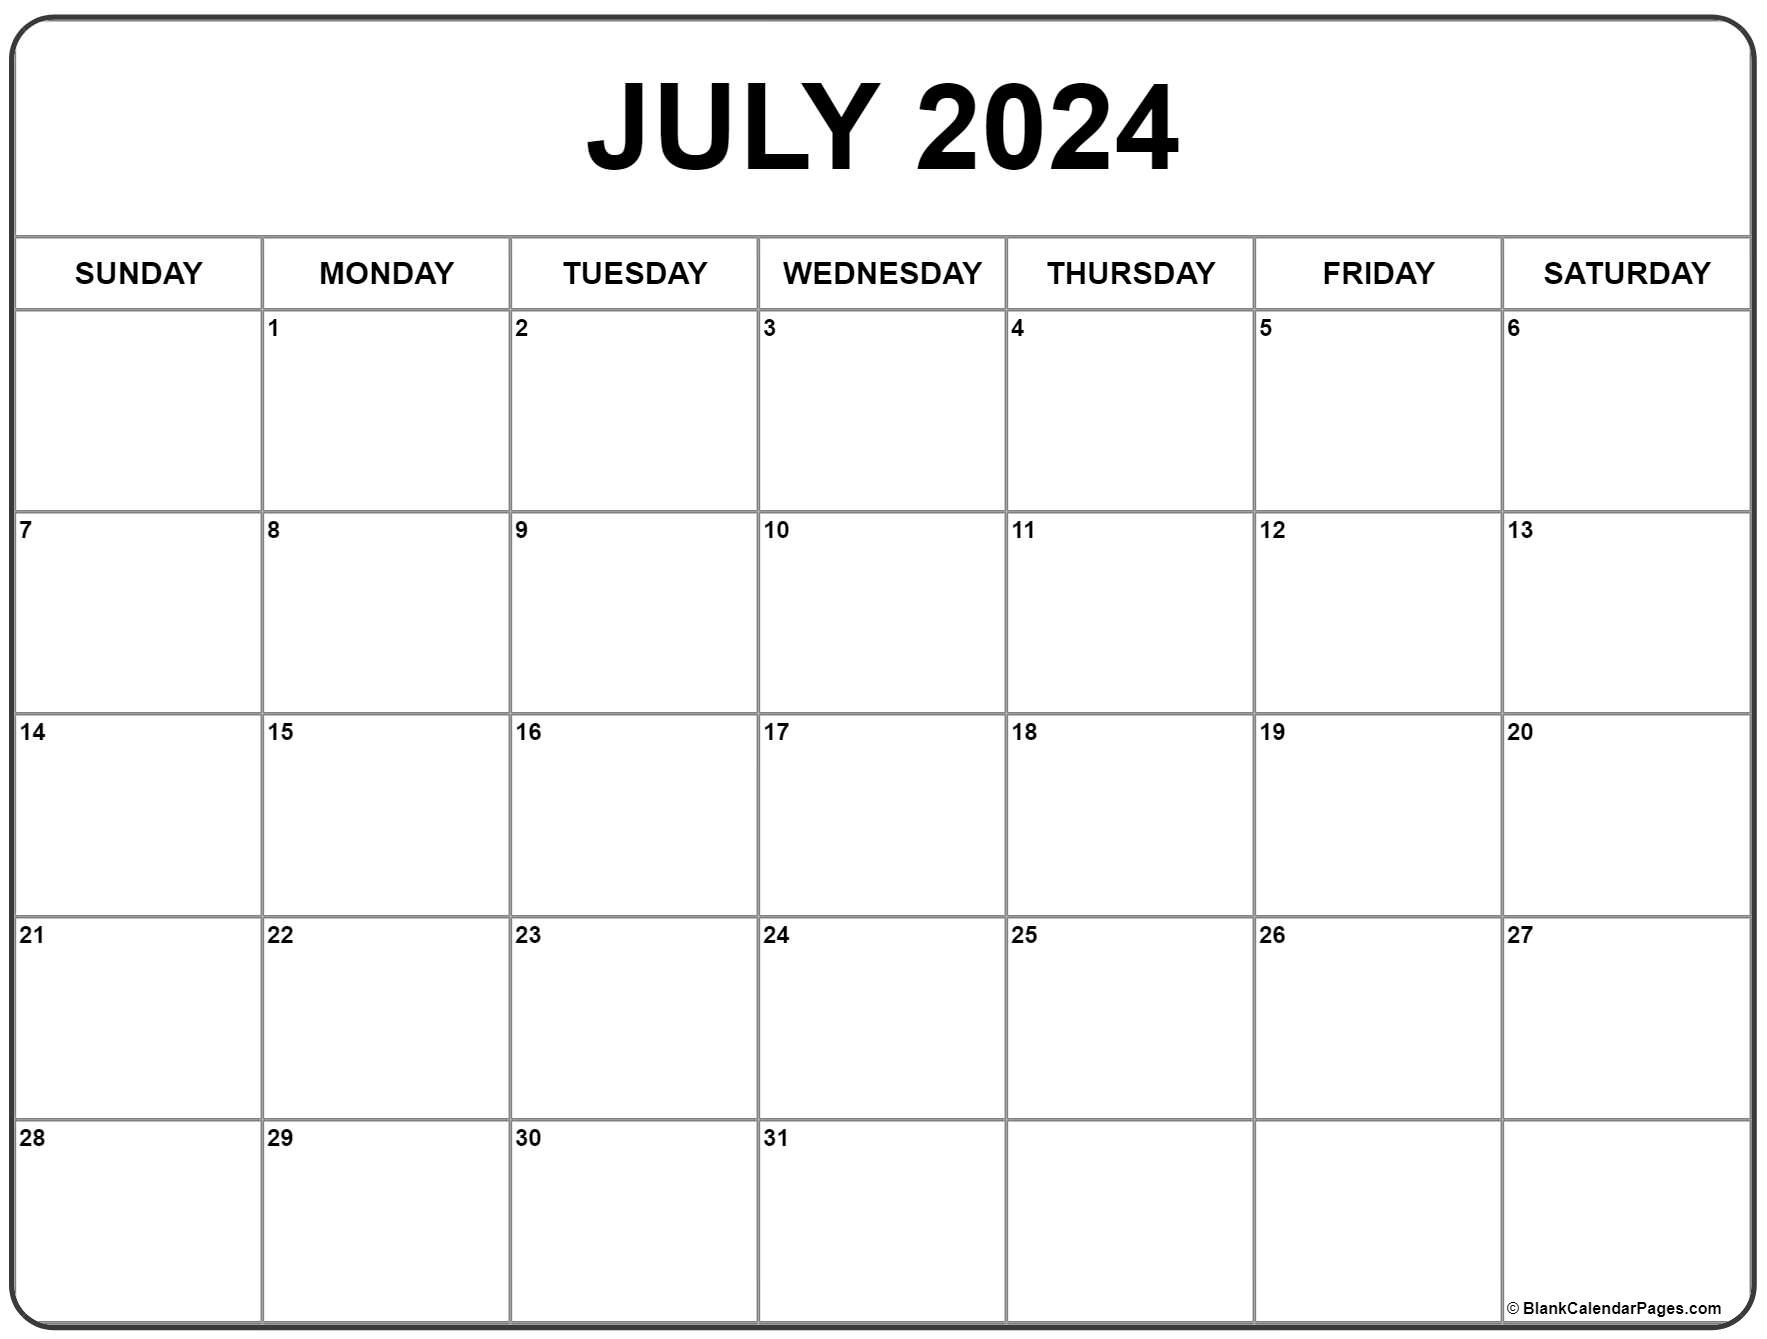 July 2024 Calendar | Free Printable Calendar for Free Printable Calendar For July 2024